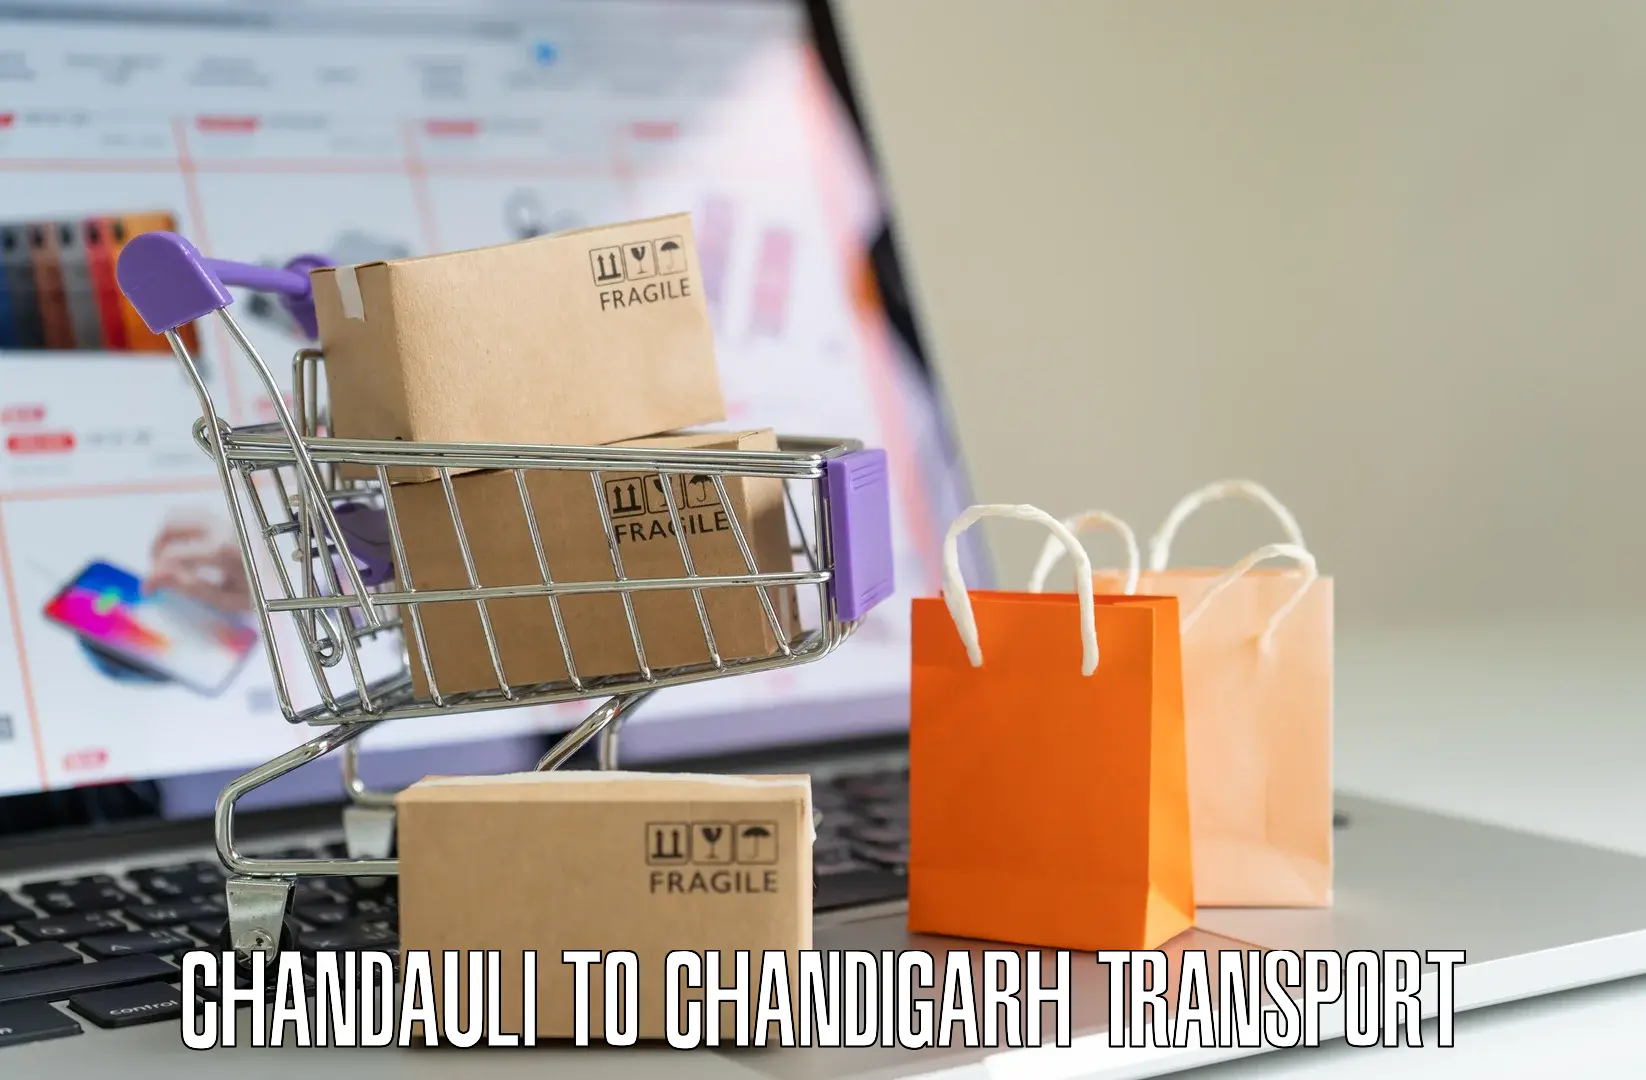 Furniture transport service Chandauli to Chandigarh